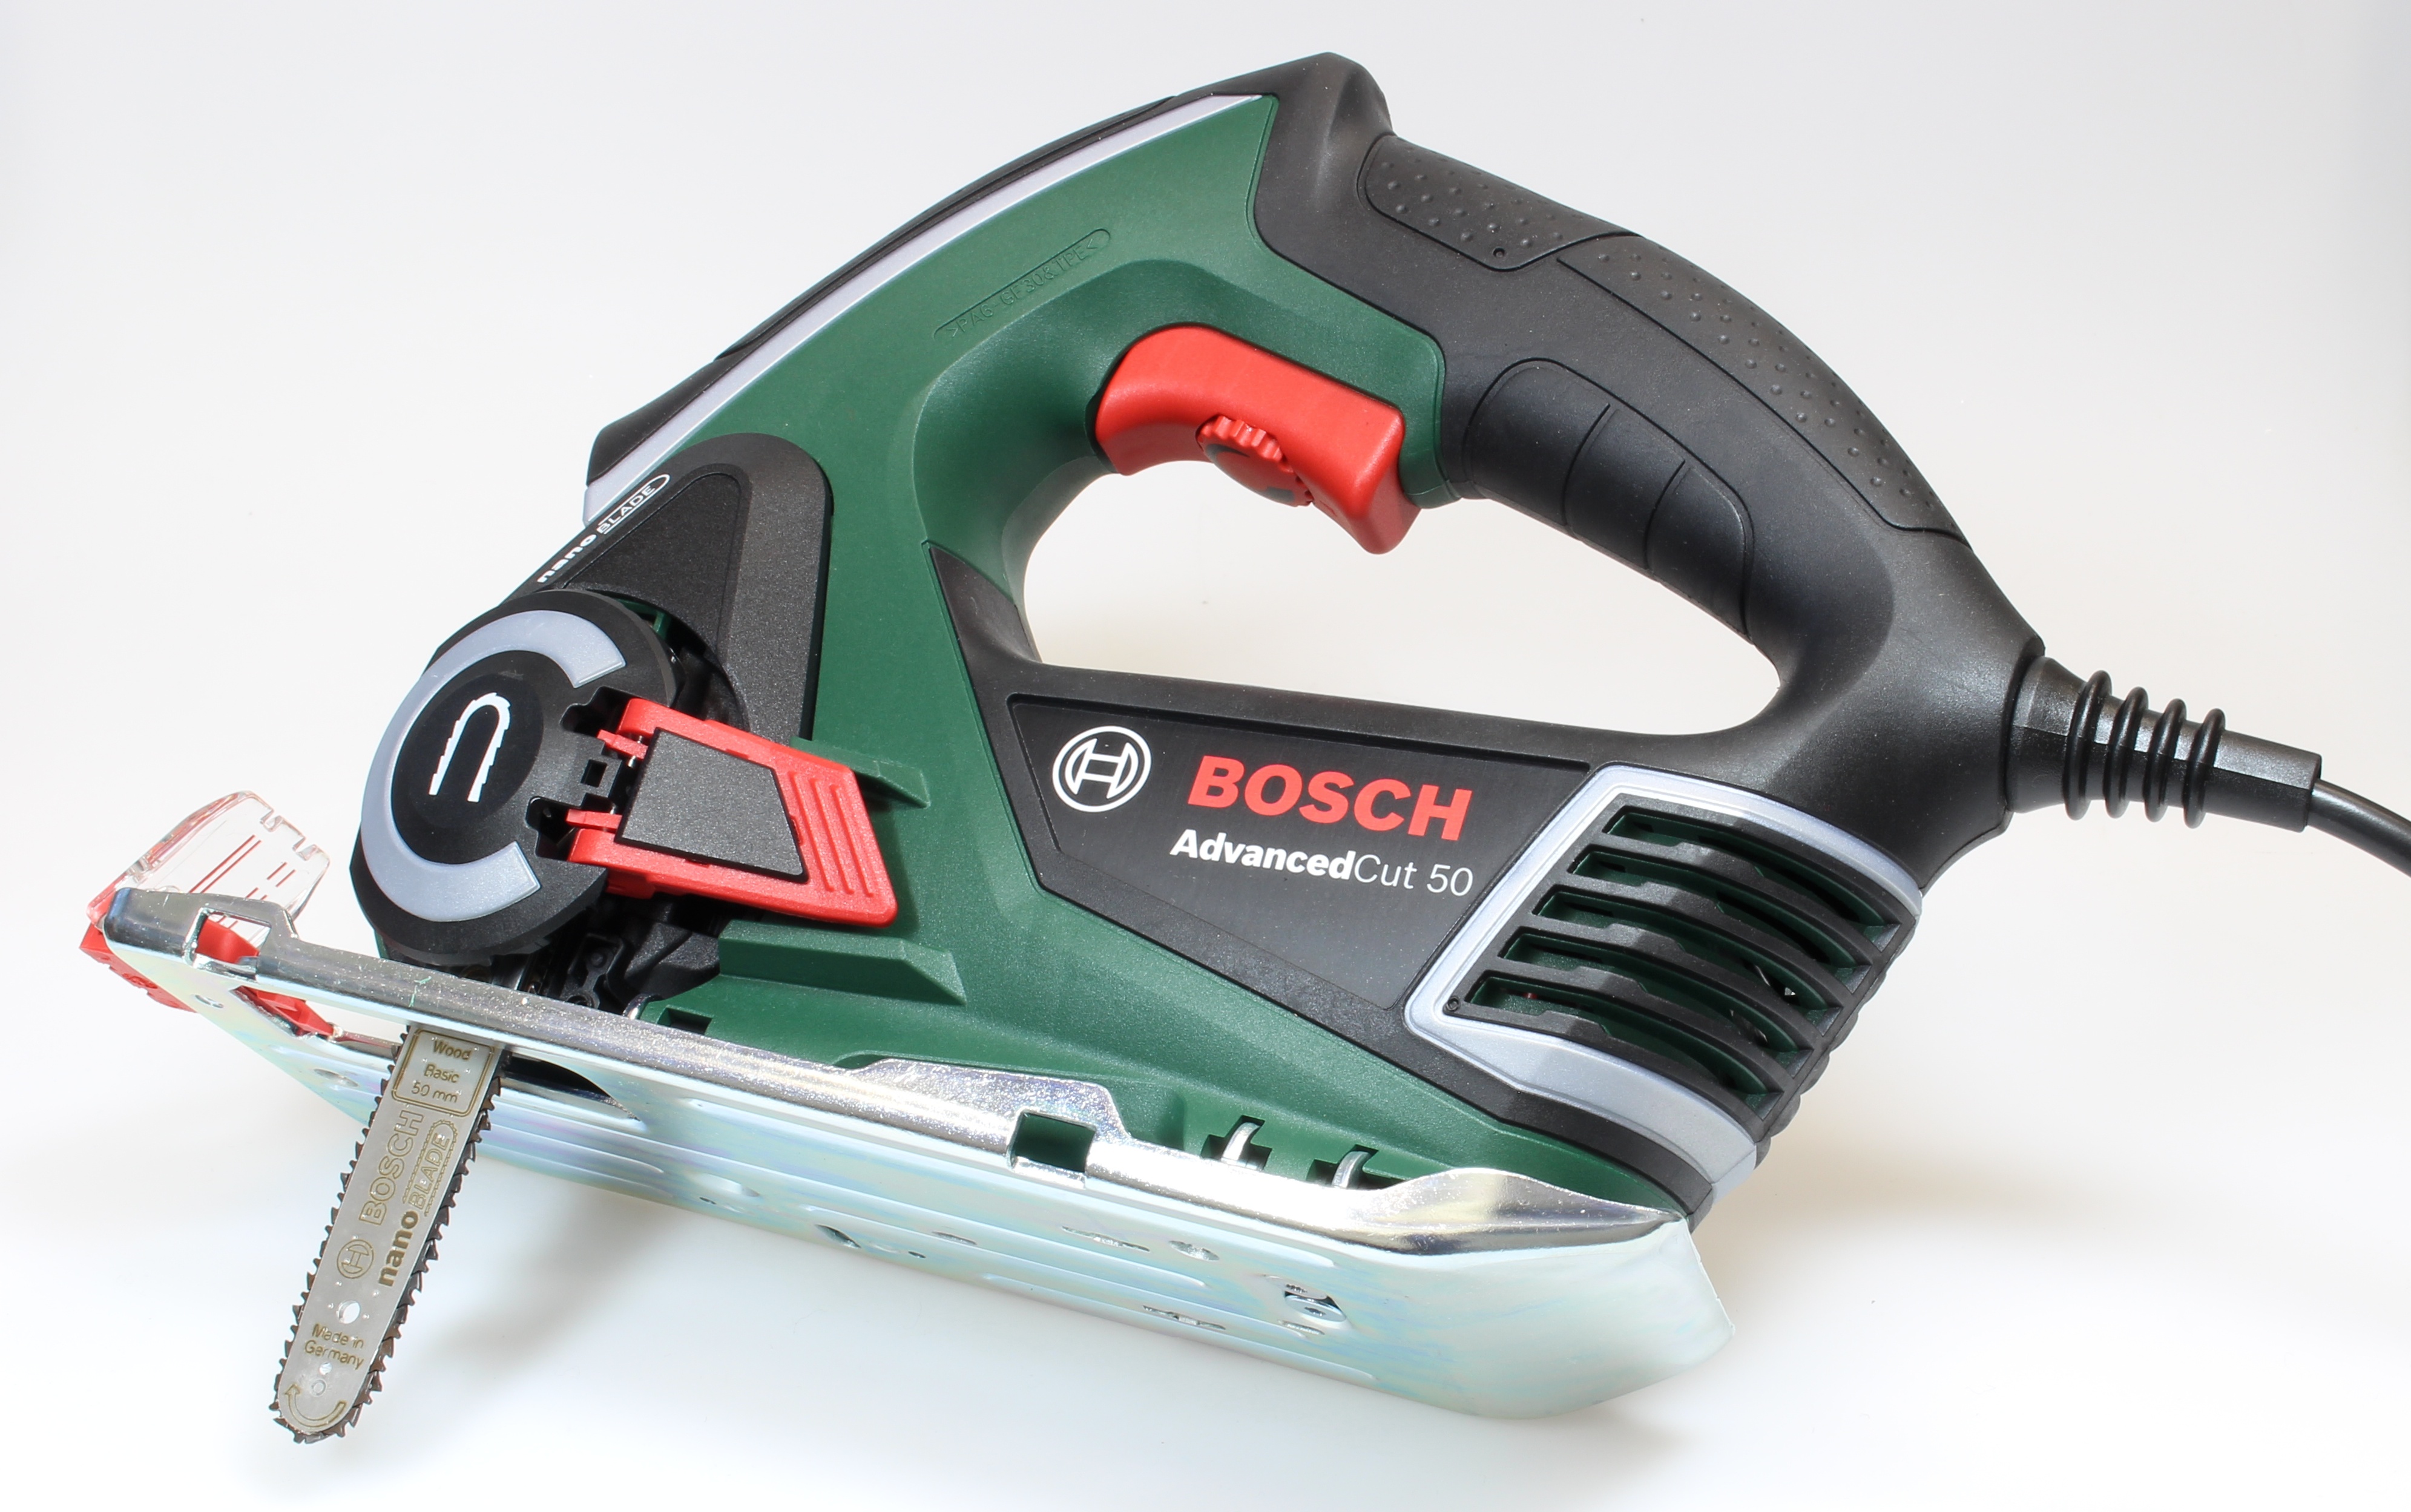 Bosch advancedcut 50